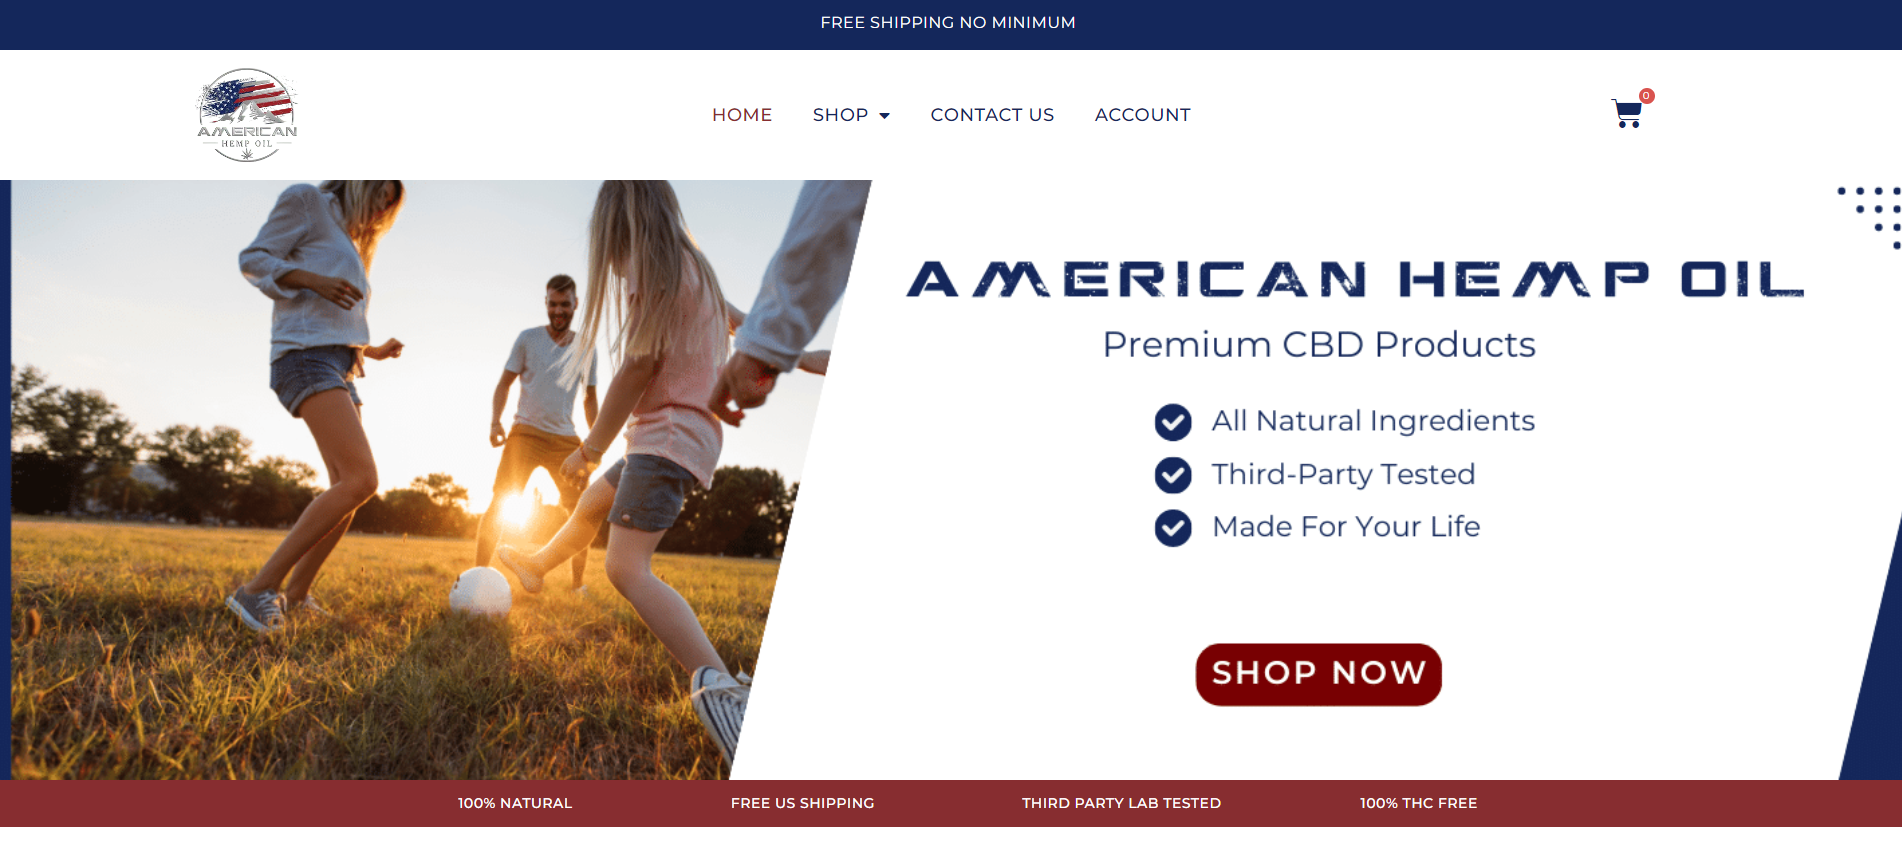 American Hemp Oil Affiliate Program Homepage Image